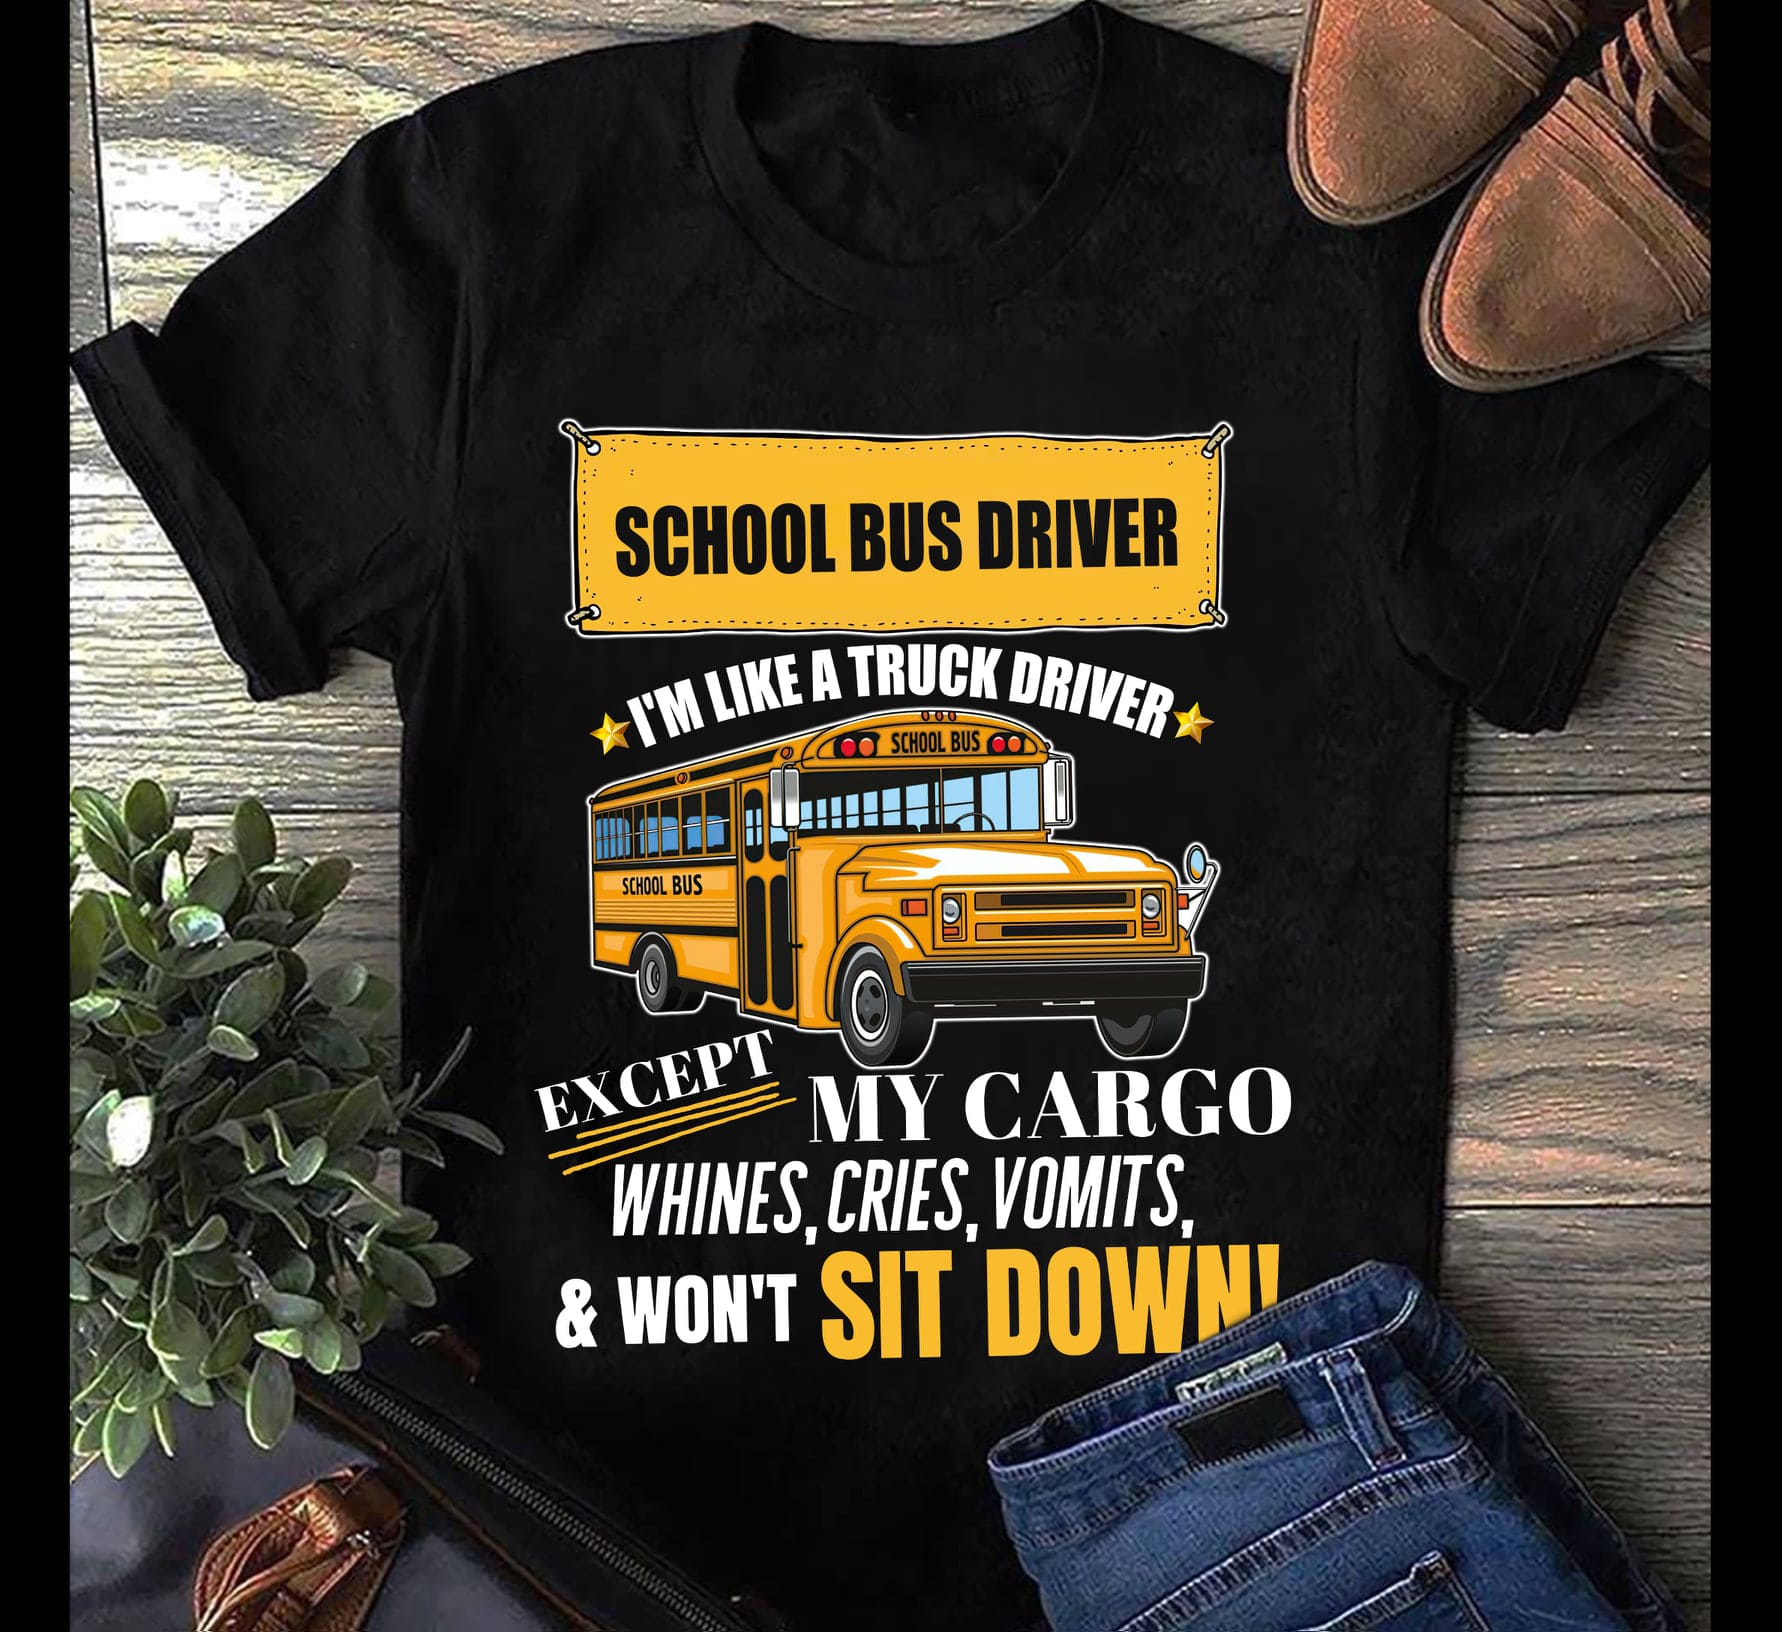 School bus driver I'm like a truck driver - Bus driver the job